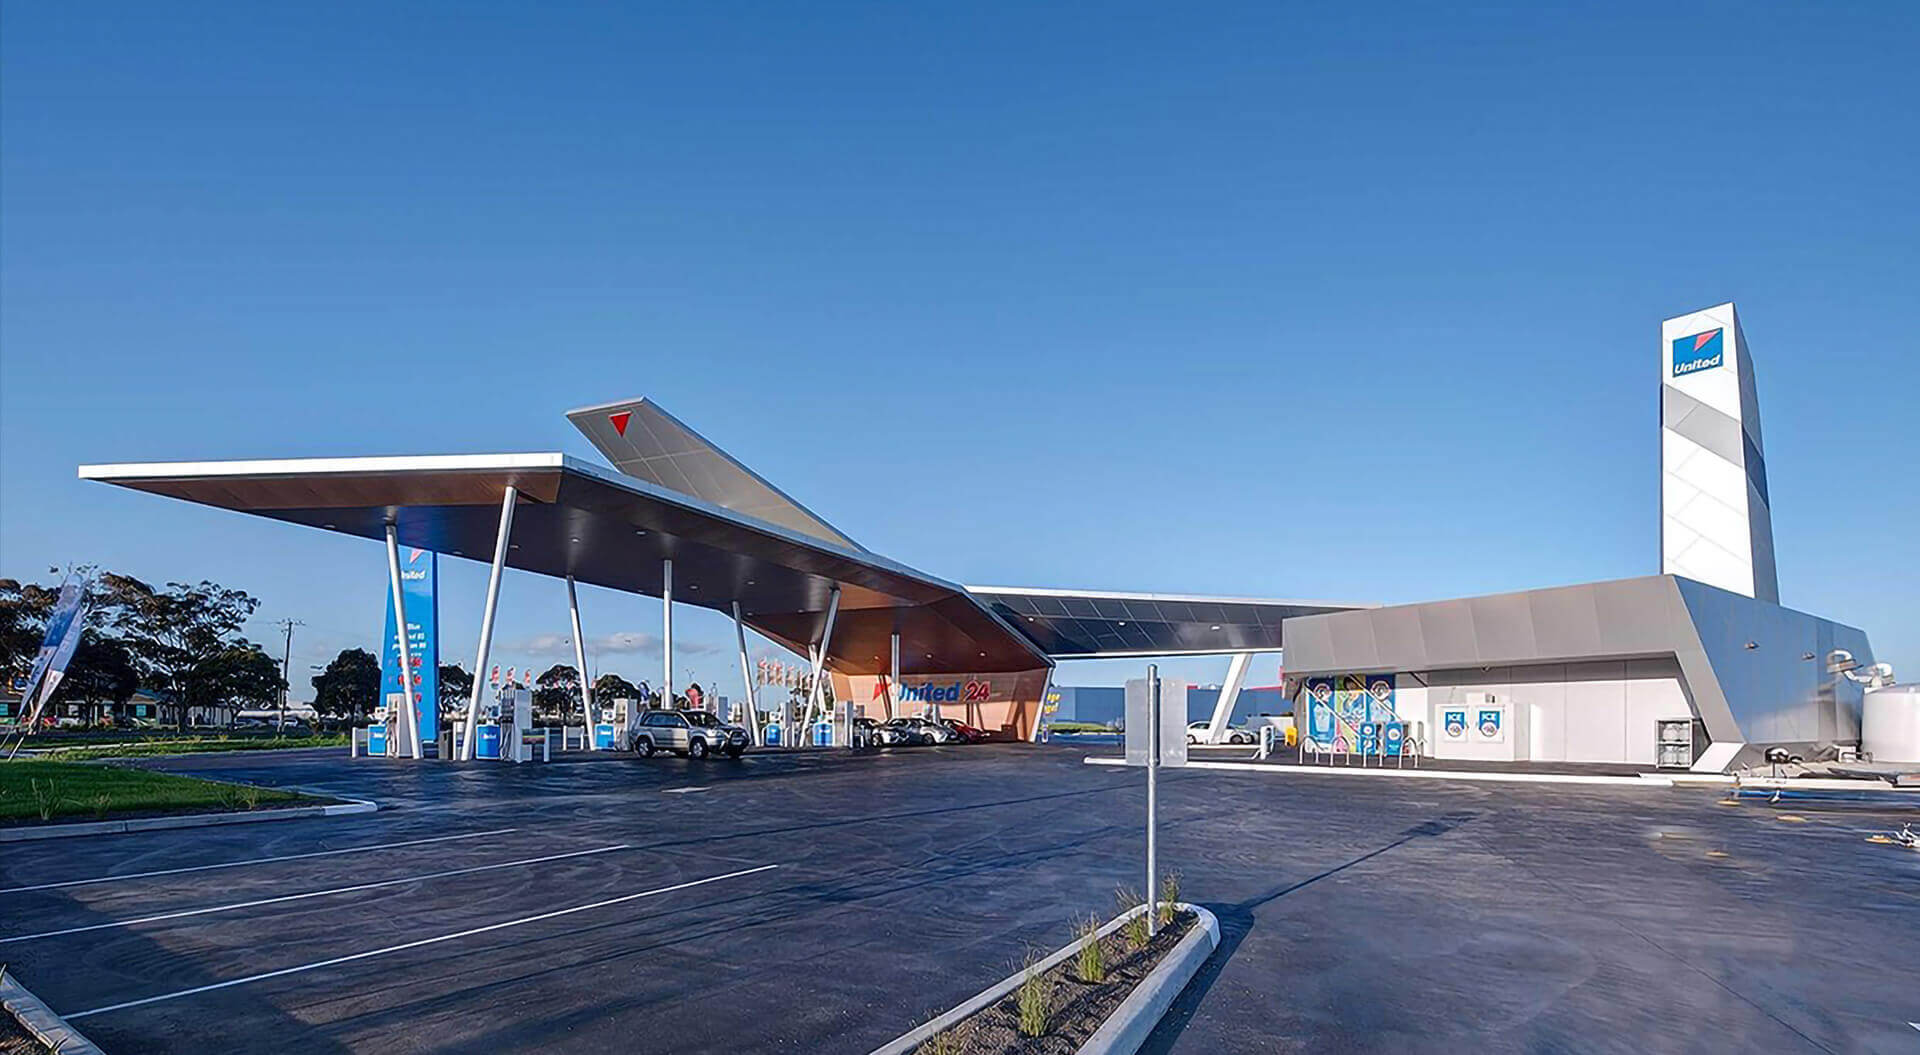 United 24 Petrol Forecourt Benchmark, Innovative Architecture, Canopy Design, Victoria Australia 2017 - CampbellRigg Agency